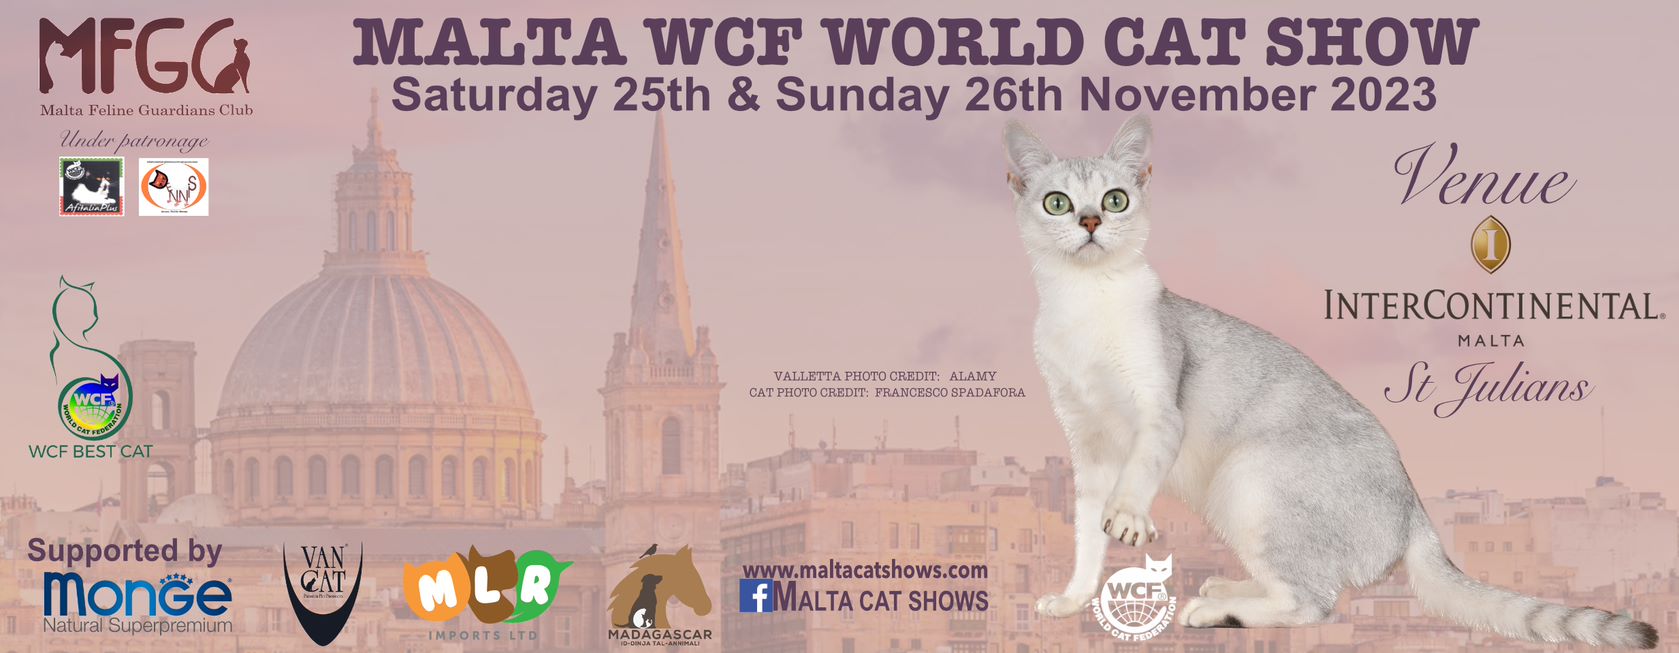 Malta WCF World Cat Show 2023